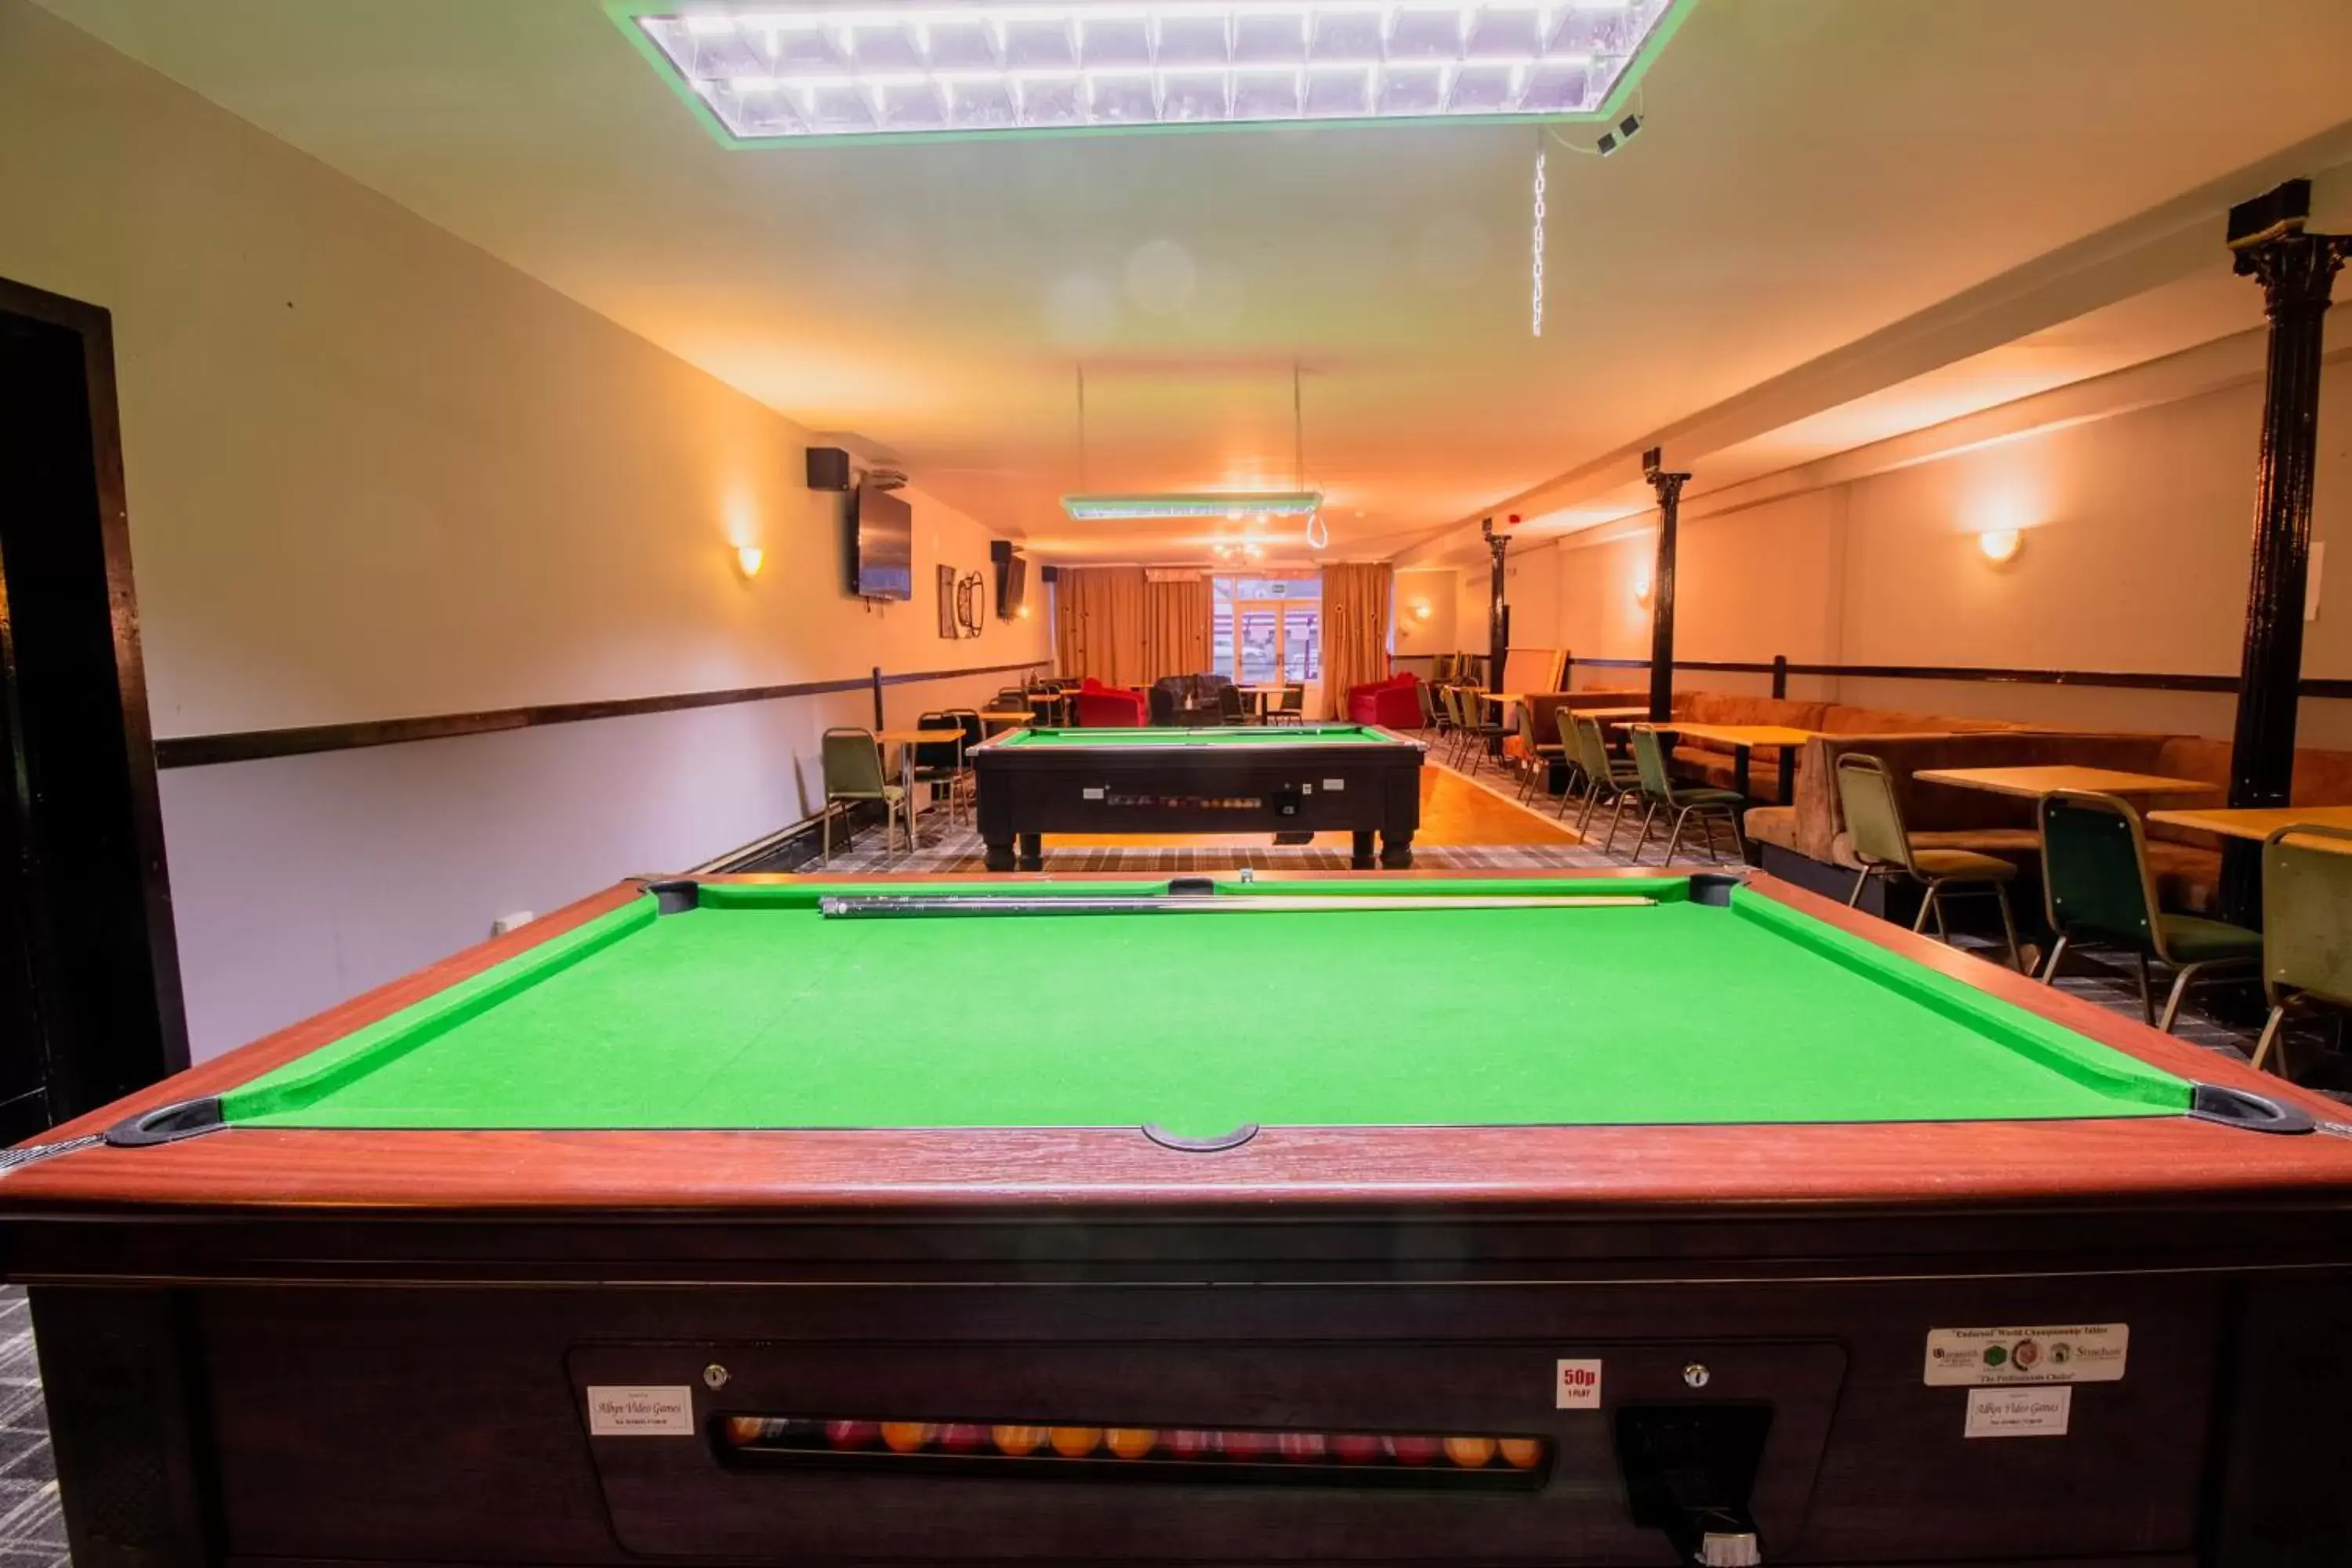 Game Room, Billiards in The Ben Mhor Hotel, Bar & Restaurant